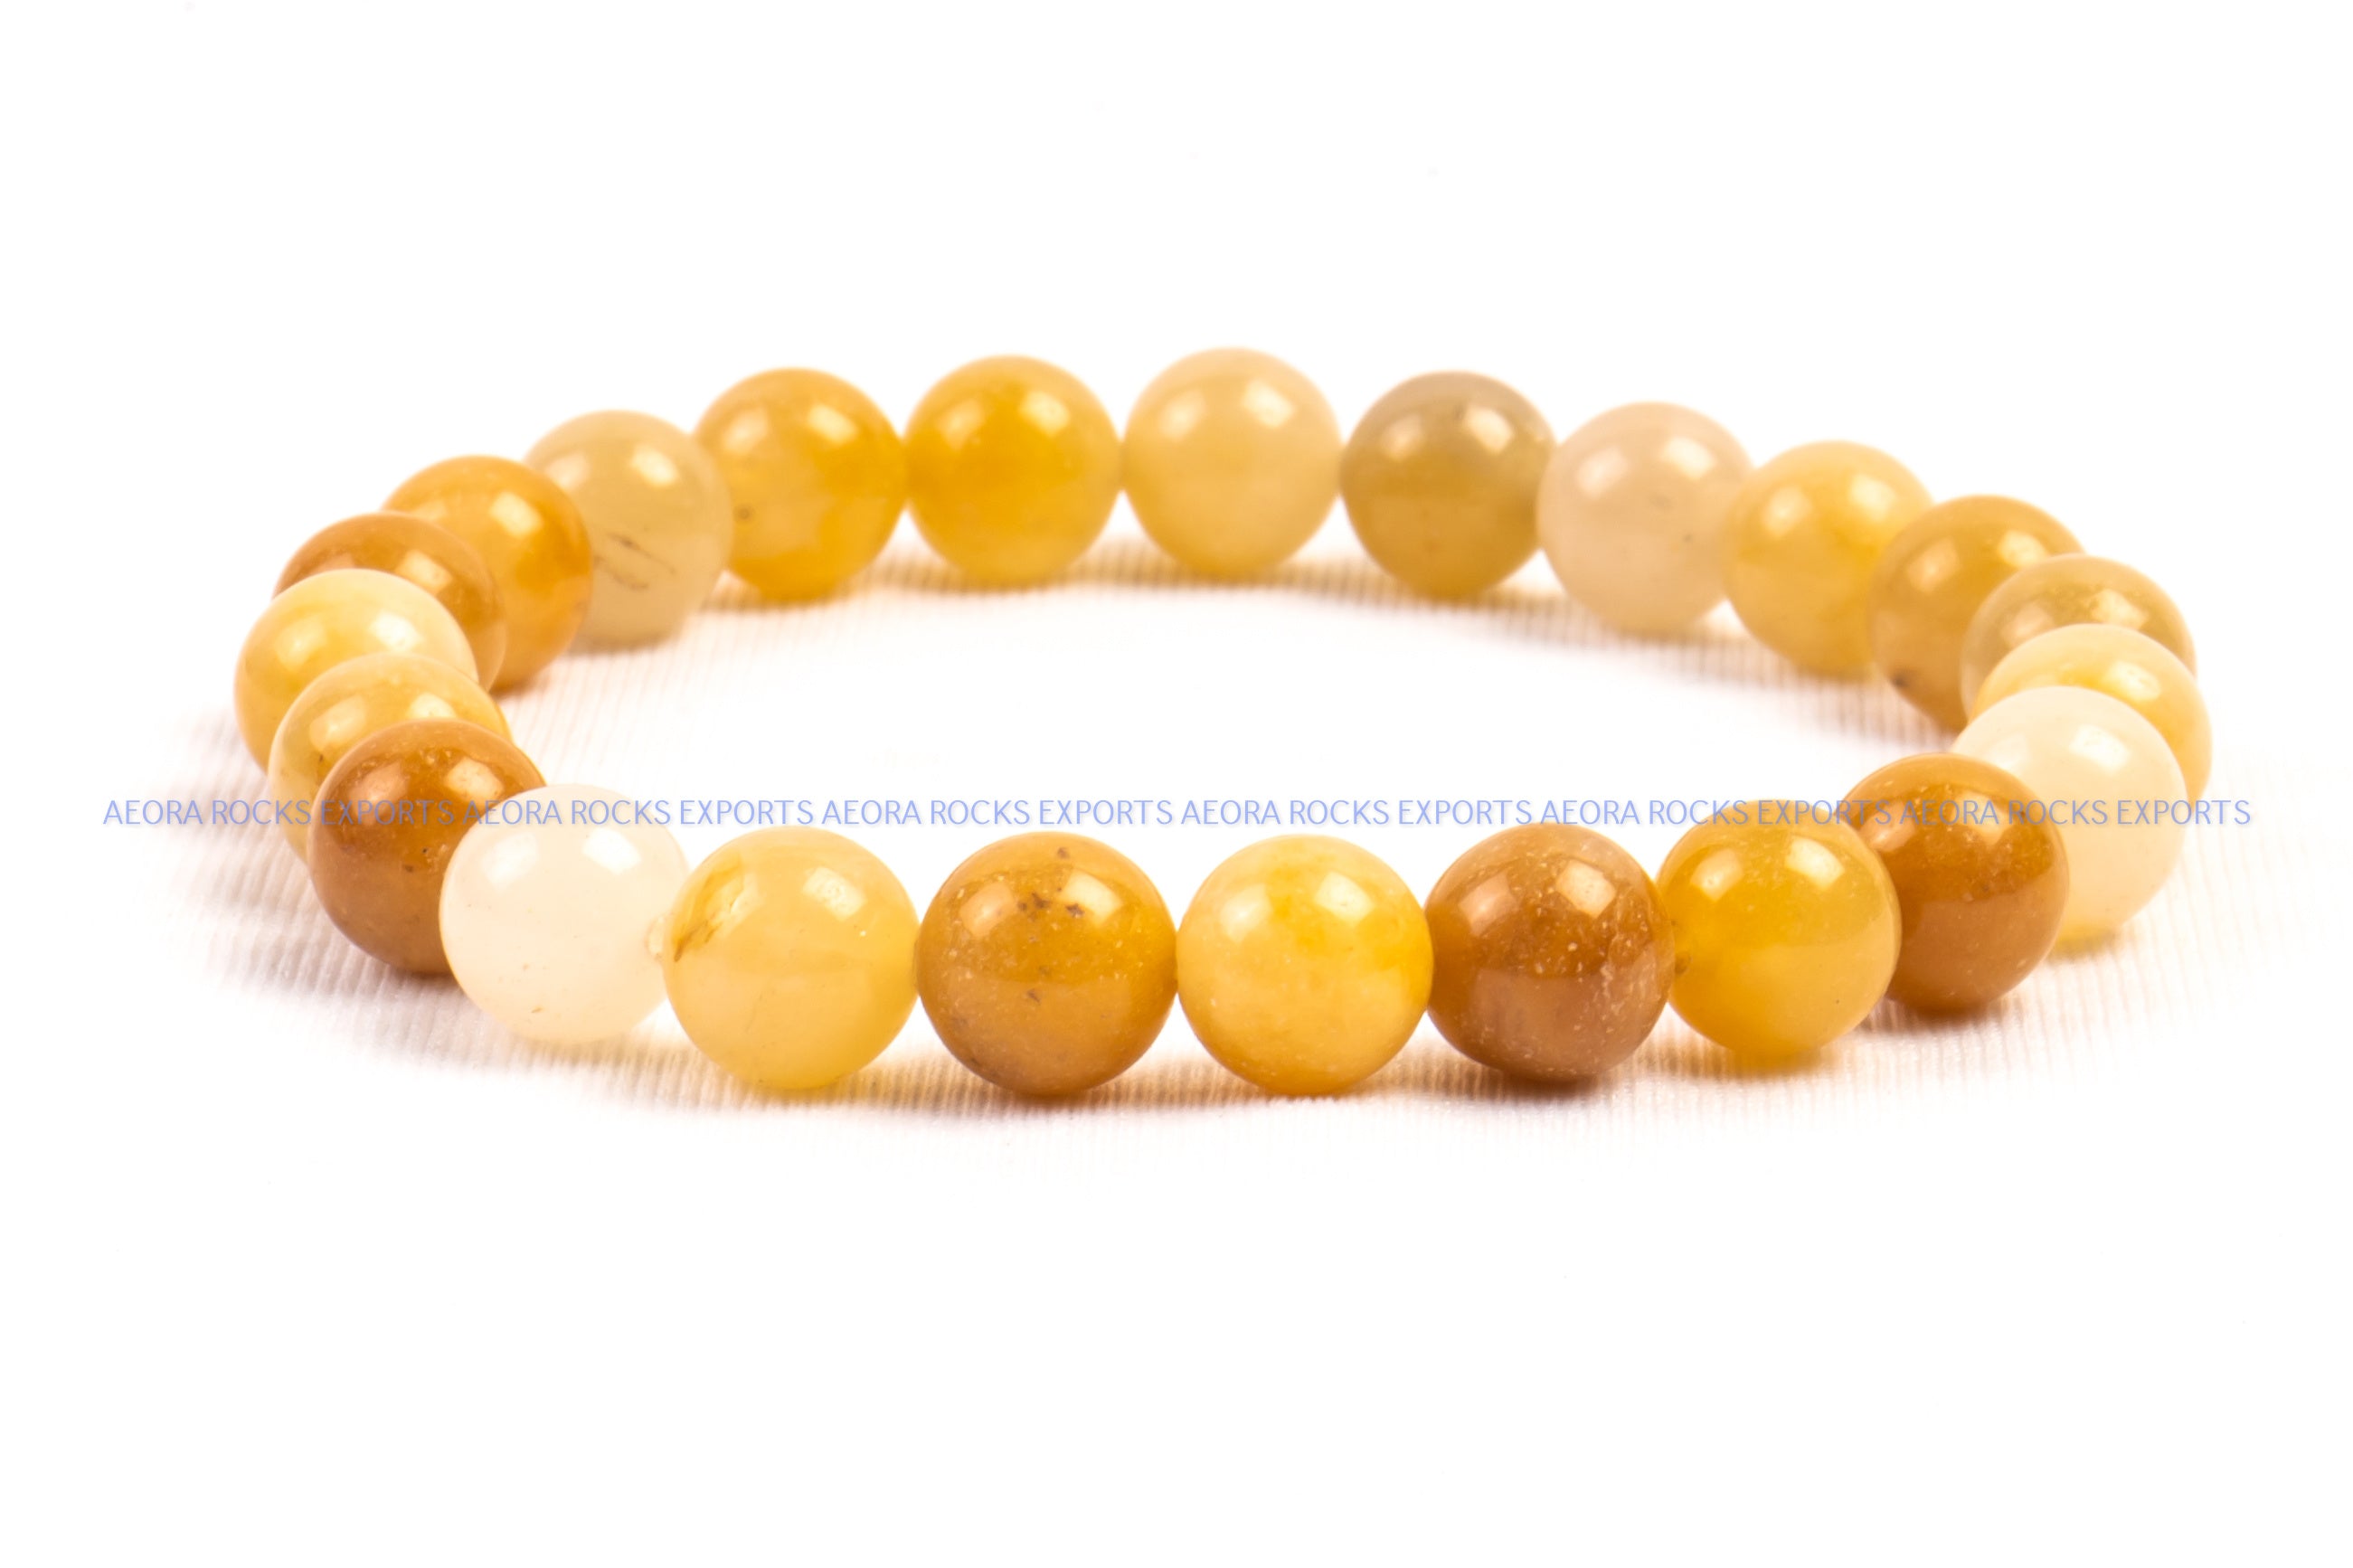 Buy Streetsoul Beads Wristband Yellow Red  Wine 4mm  6mm Set of 3 pcs Bead  Bracelets for Men Women at Amazonin